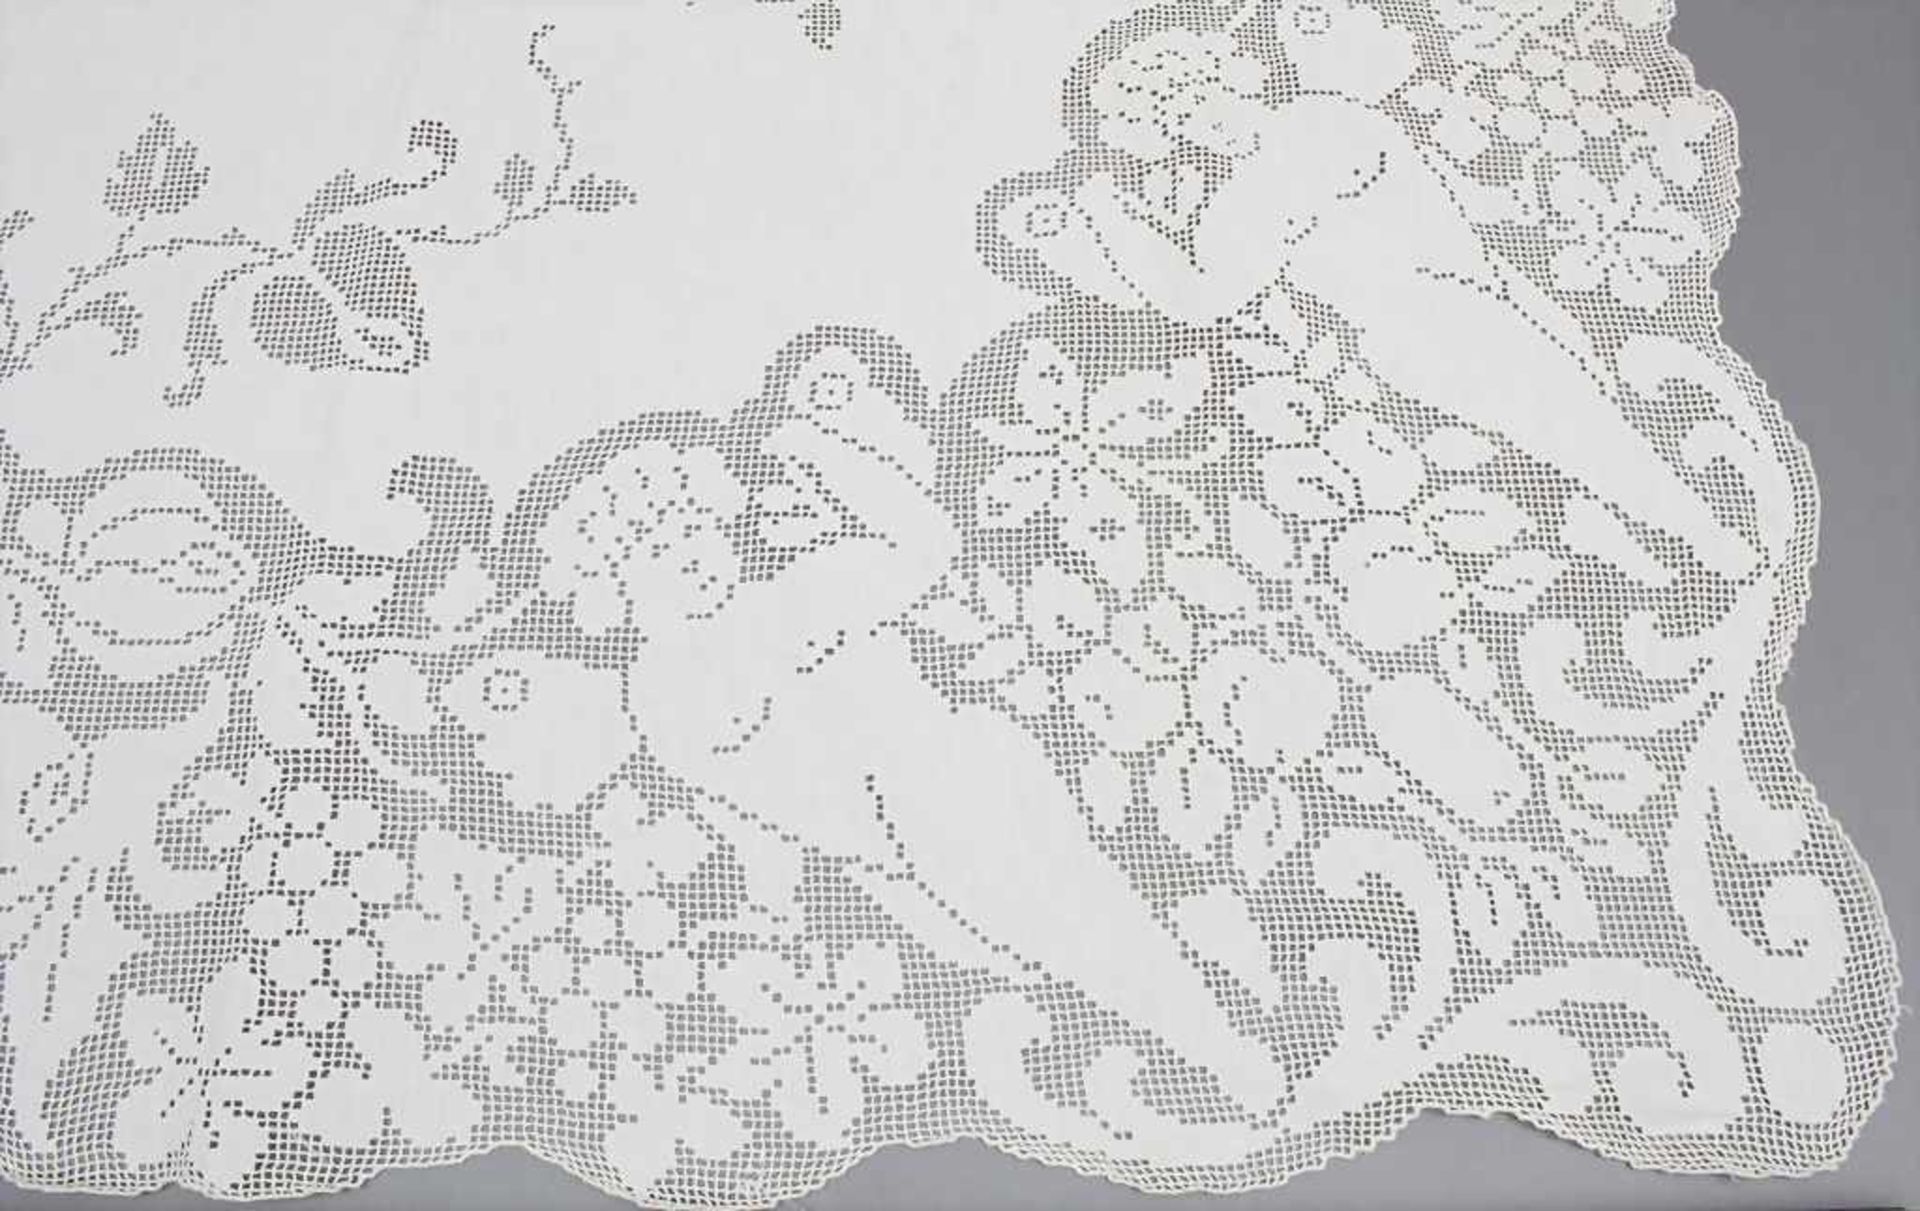 Spitzen-Tischdecke / A lace tableclothMaterial: Baumwolle, Maße: 280 x 170 cm, Zustand: gut